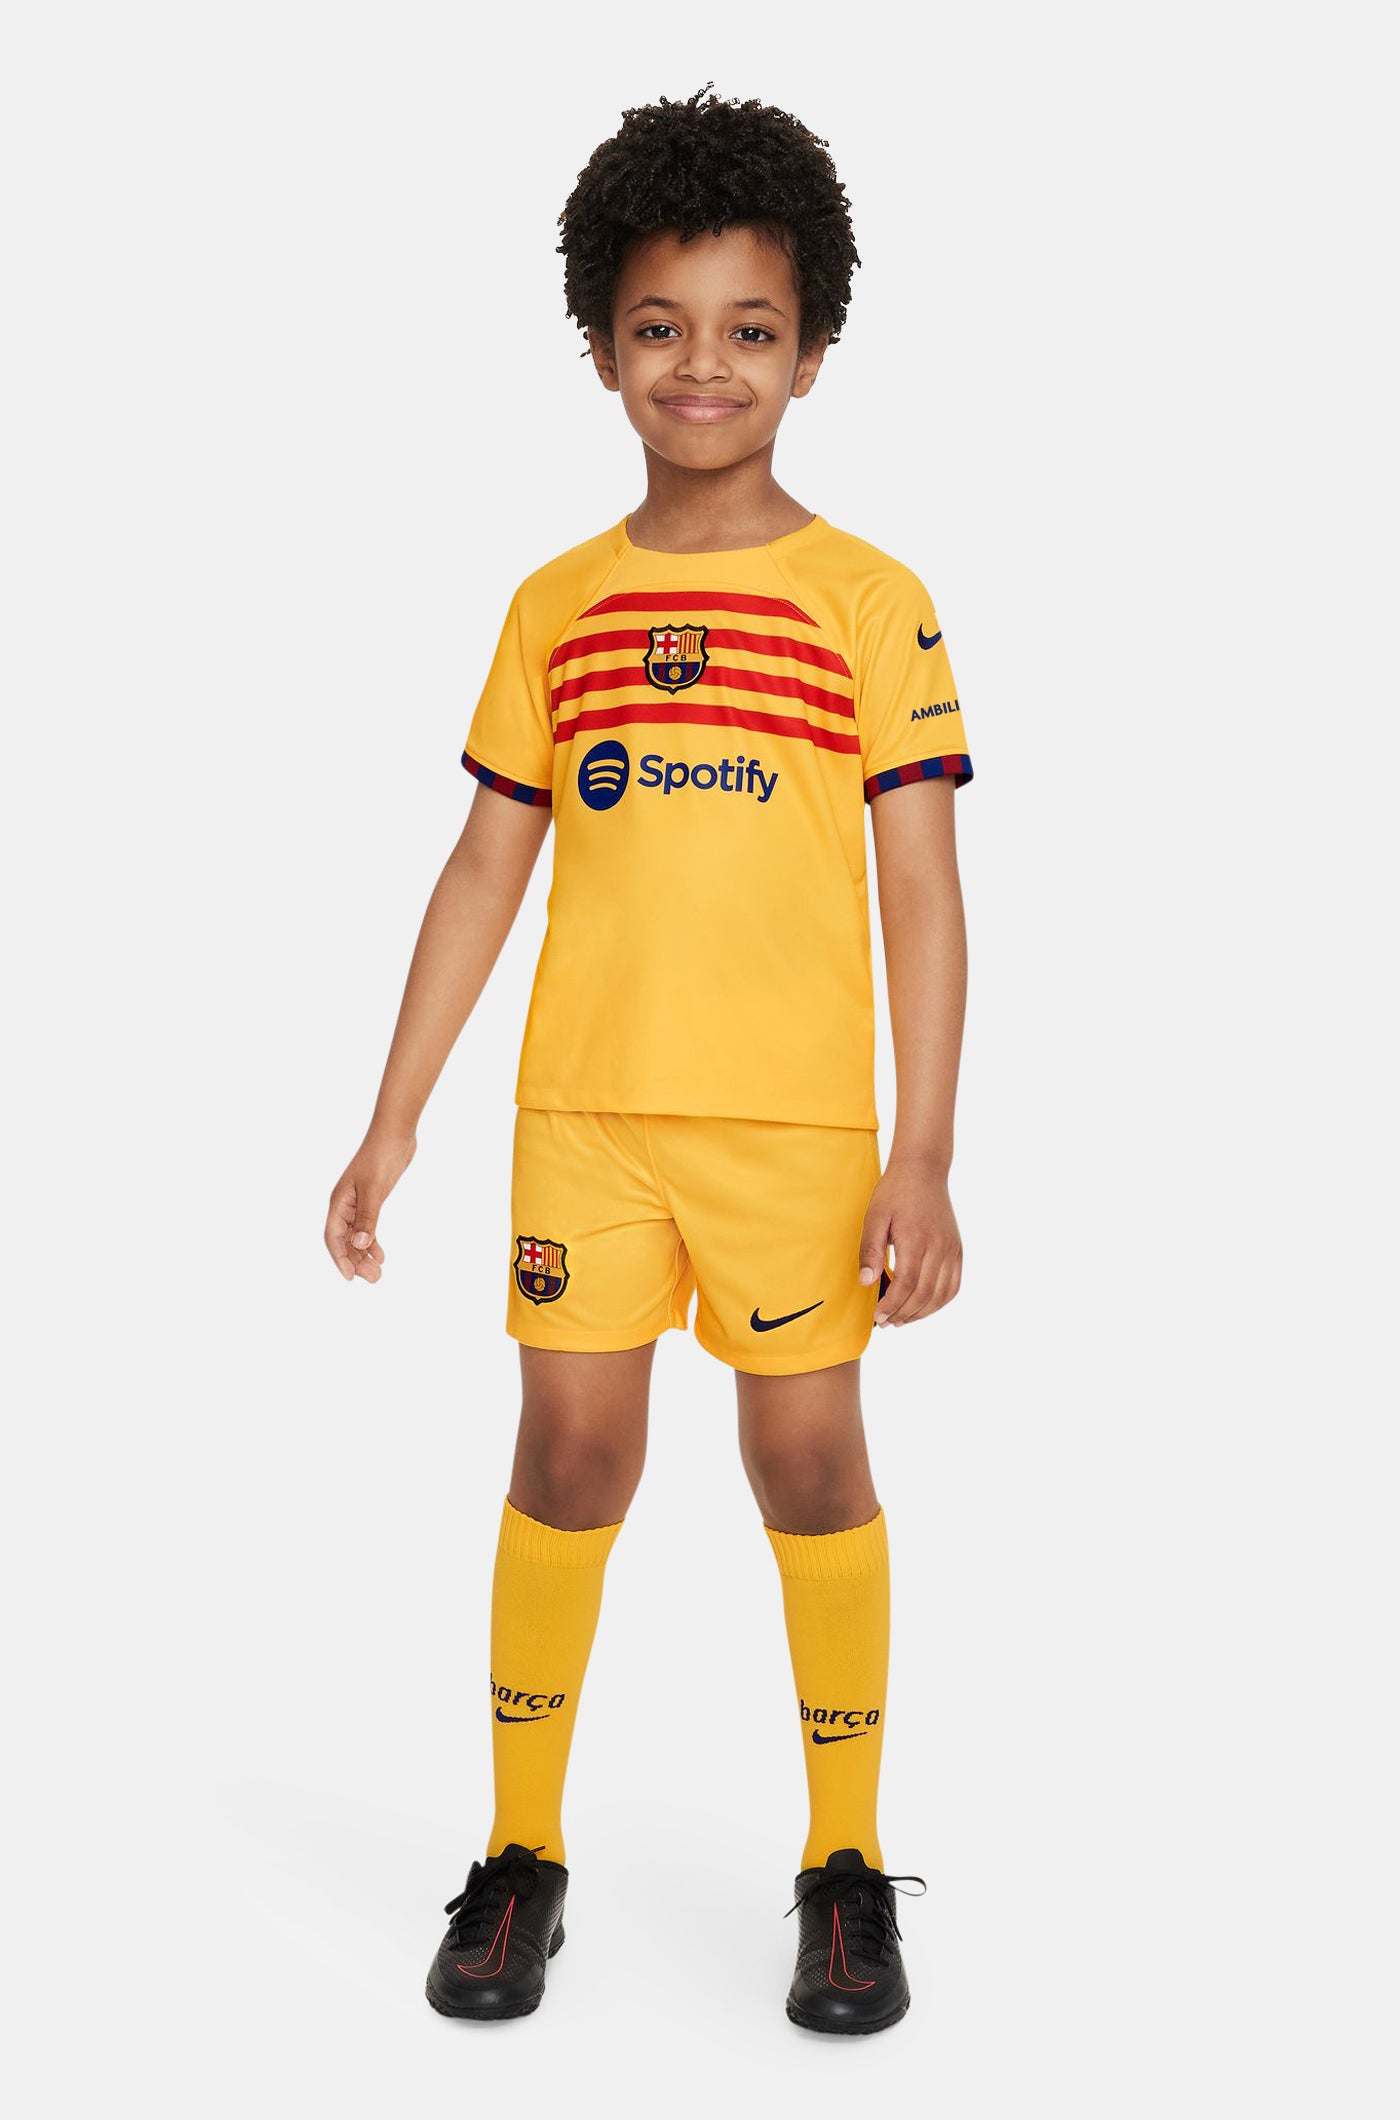 FC Barcelona fourth kit 22/23 - Little Kids - FERMÍN